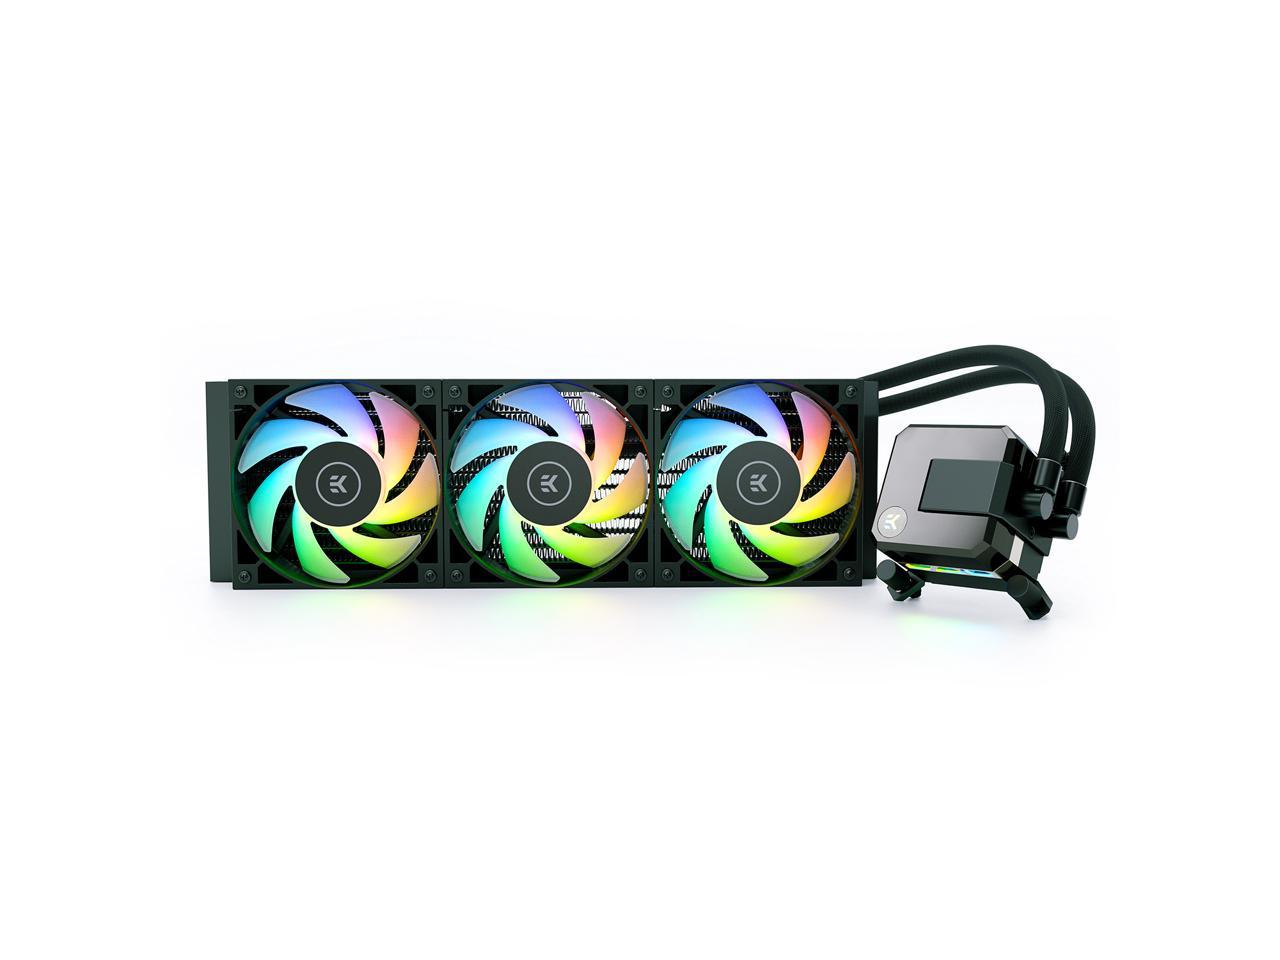 360mm EK Elite D-RGB All-in-One Liquid CPU Cooler w/ 6x EK-Vardar S 120mm Fans $104 + Free Shipping